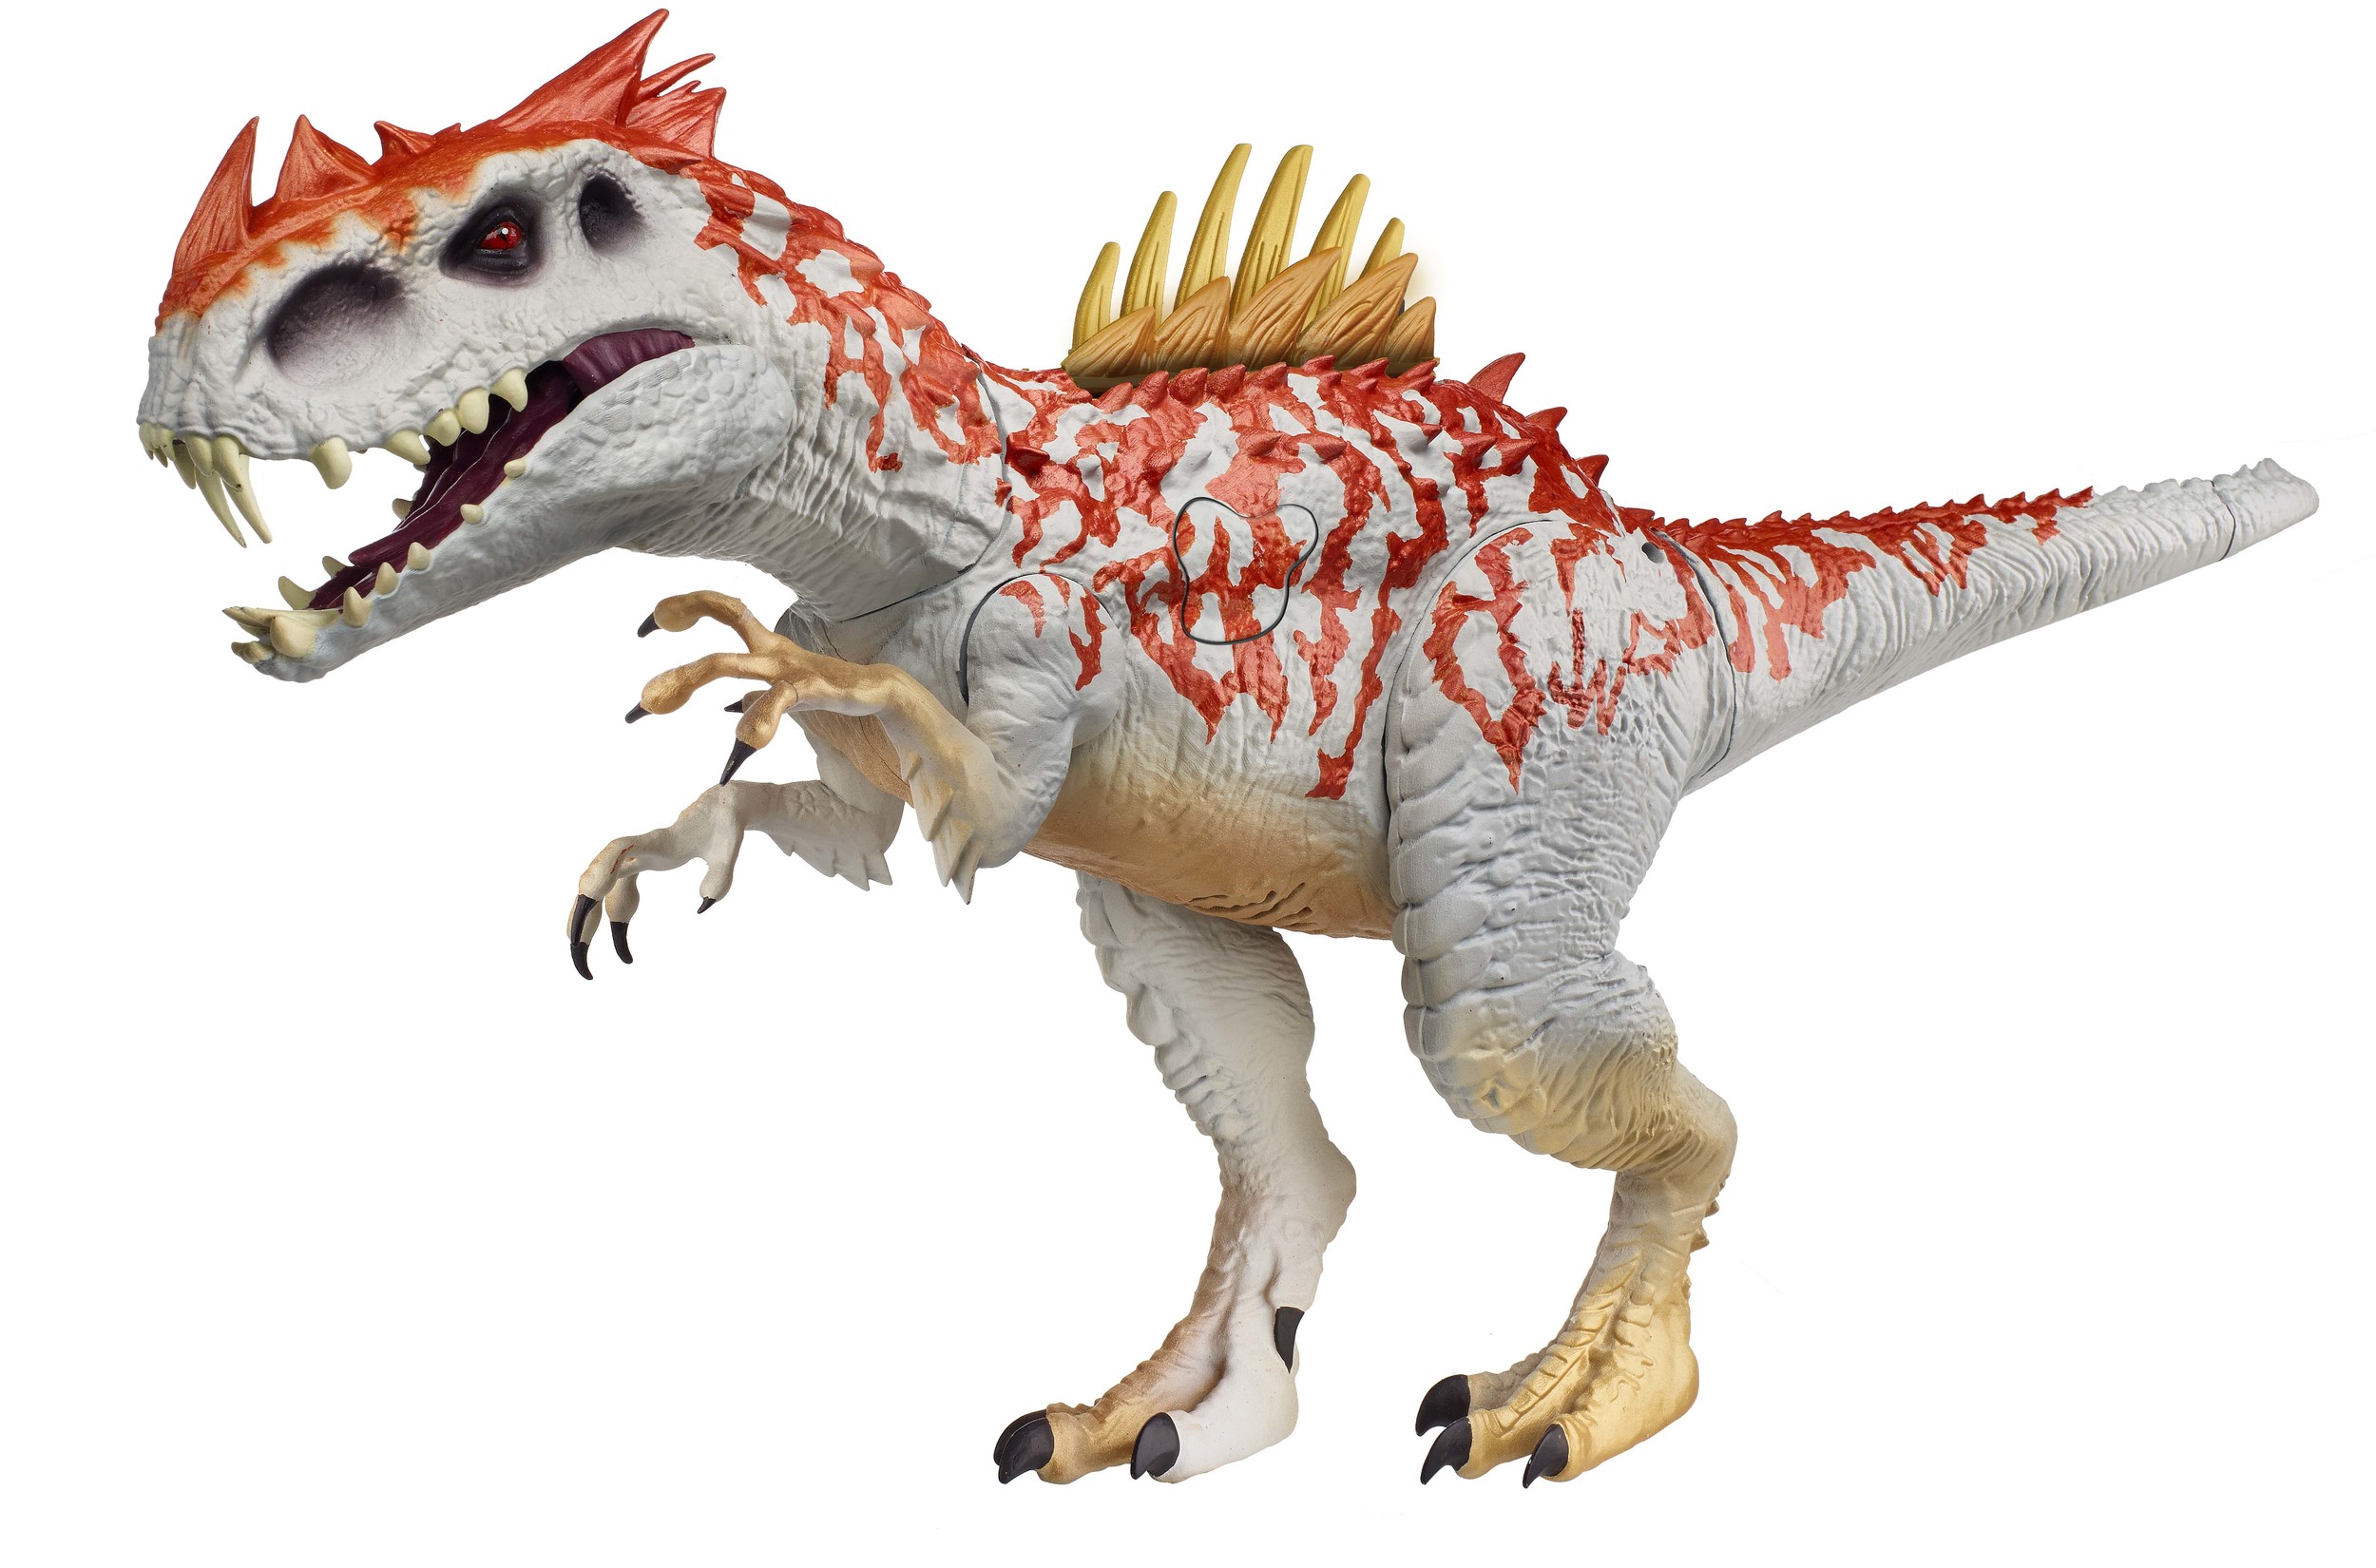 Jursassic_World_Indominus_Rex_Hybrid_Dino_Figure.jpg